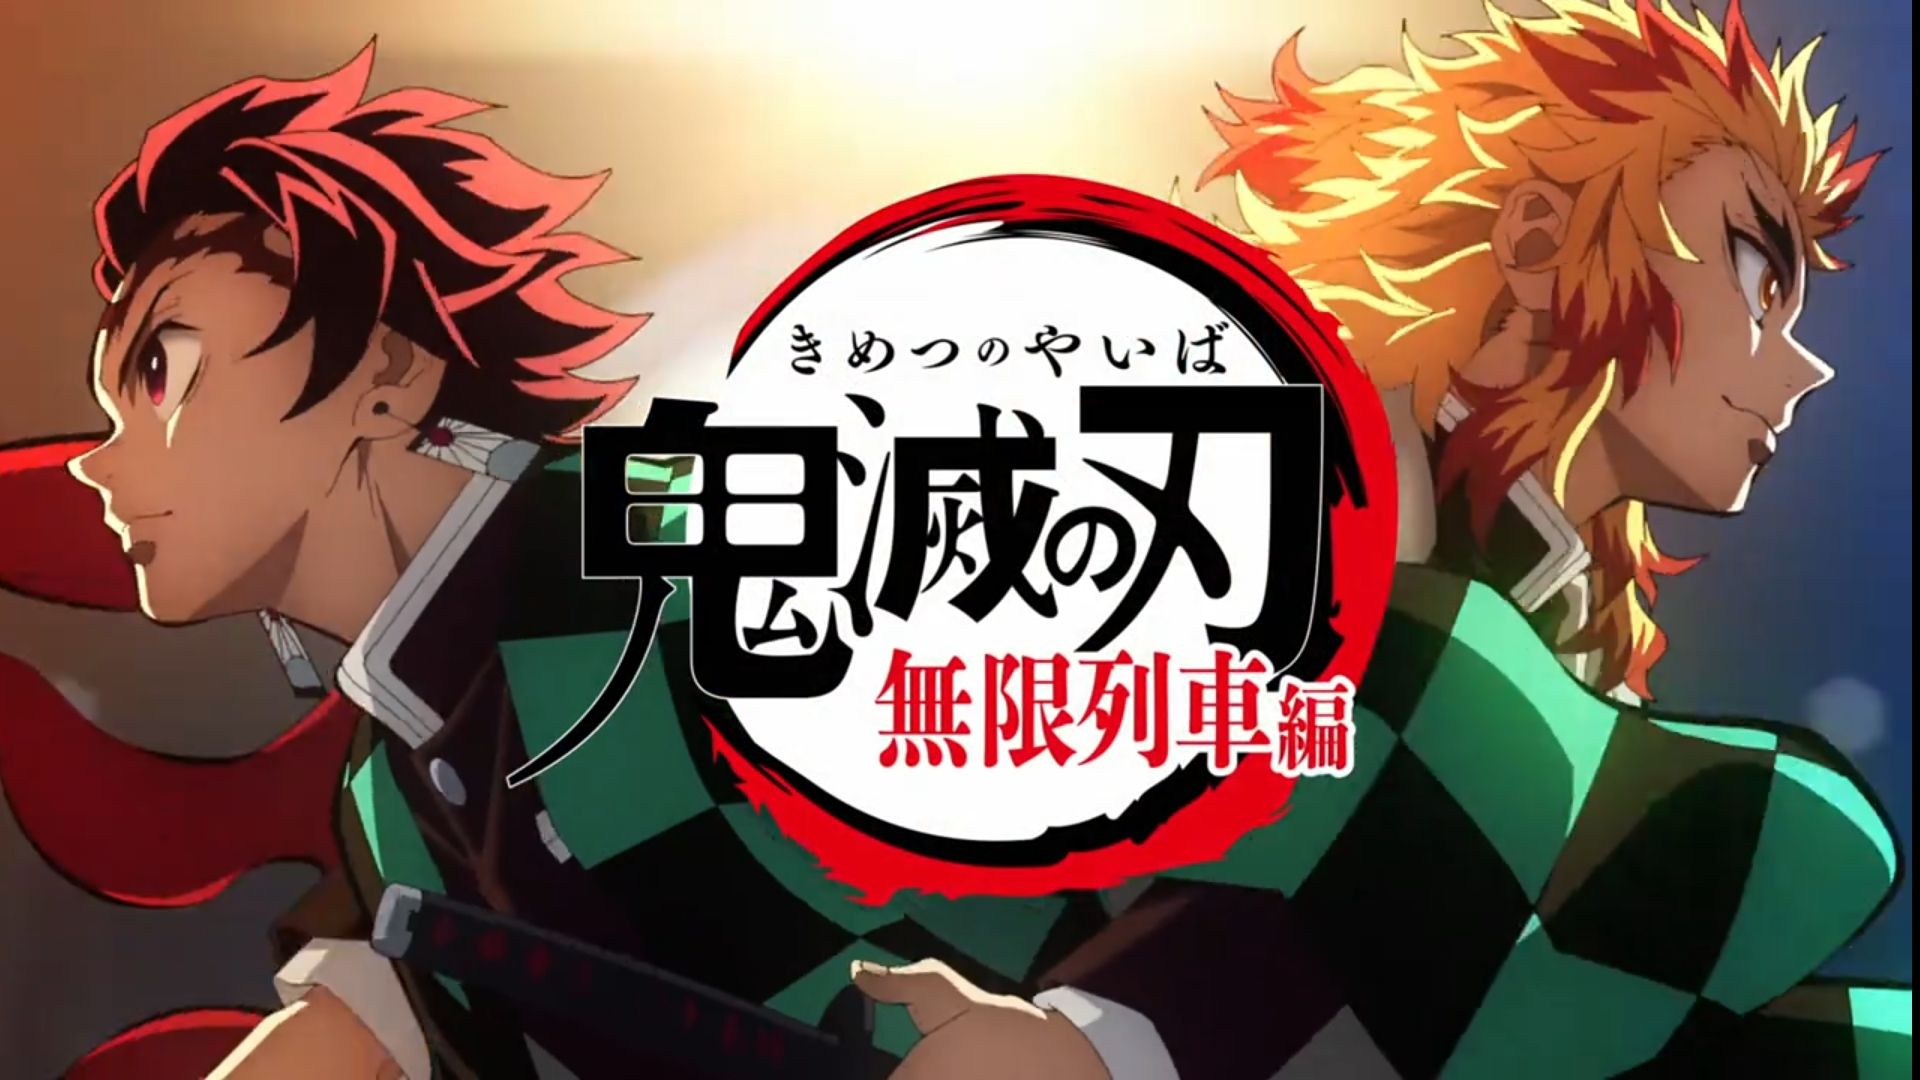 Spoiler anime Demon Slayer season 2 Kimetsu No Yaiba: Mugen Train Arc episode 3 lengkap dengan link nonton streaming subtitle Indonesia